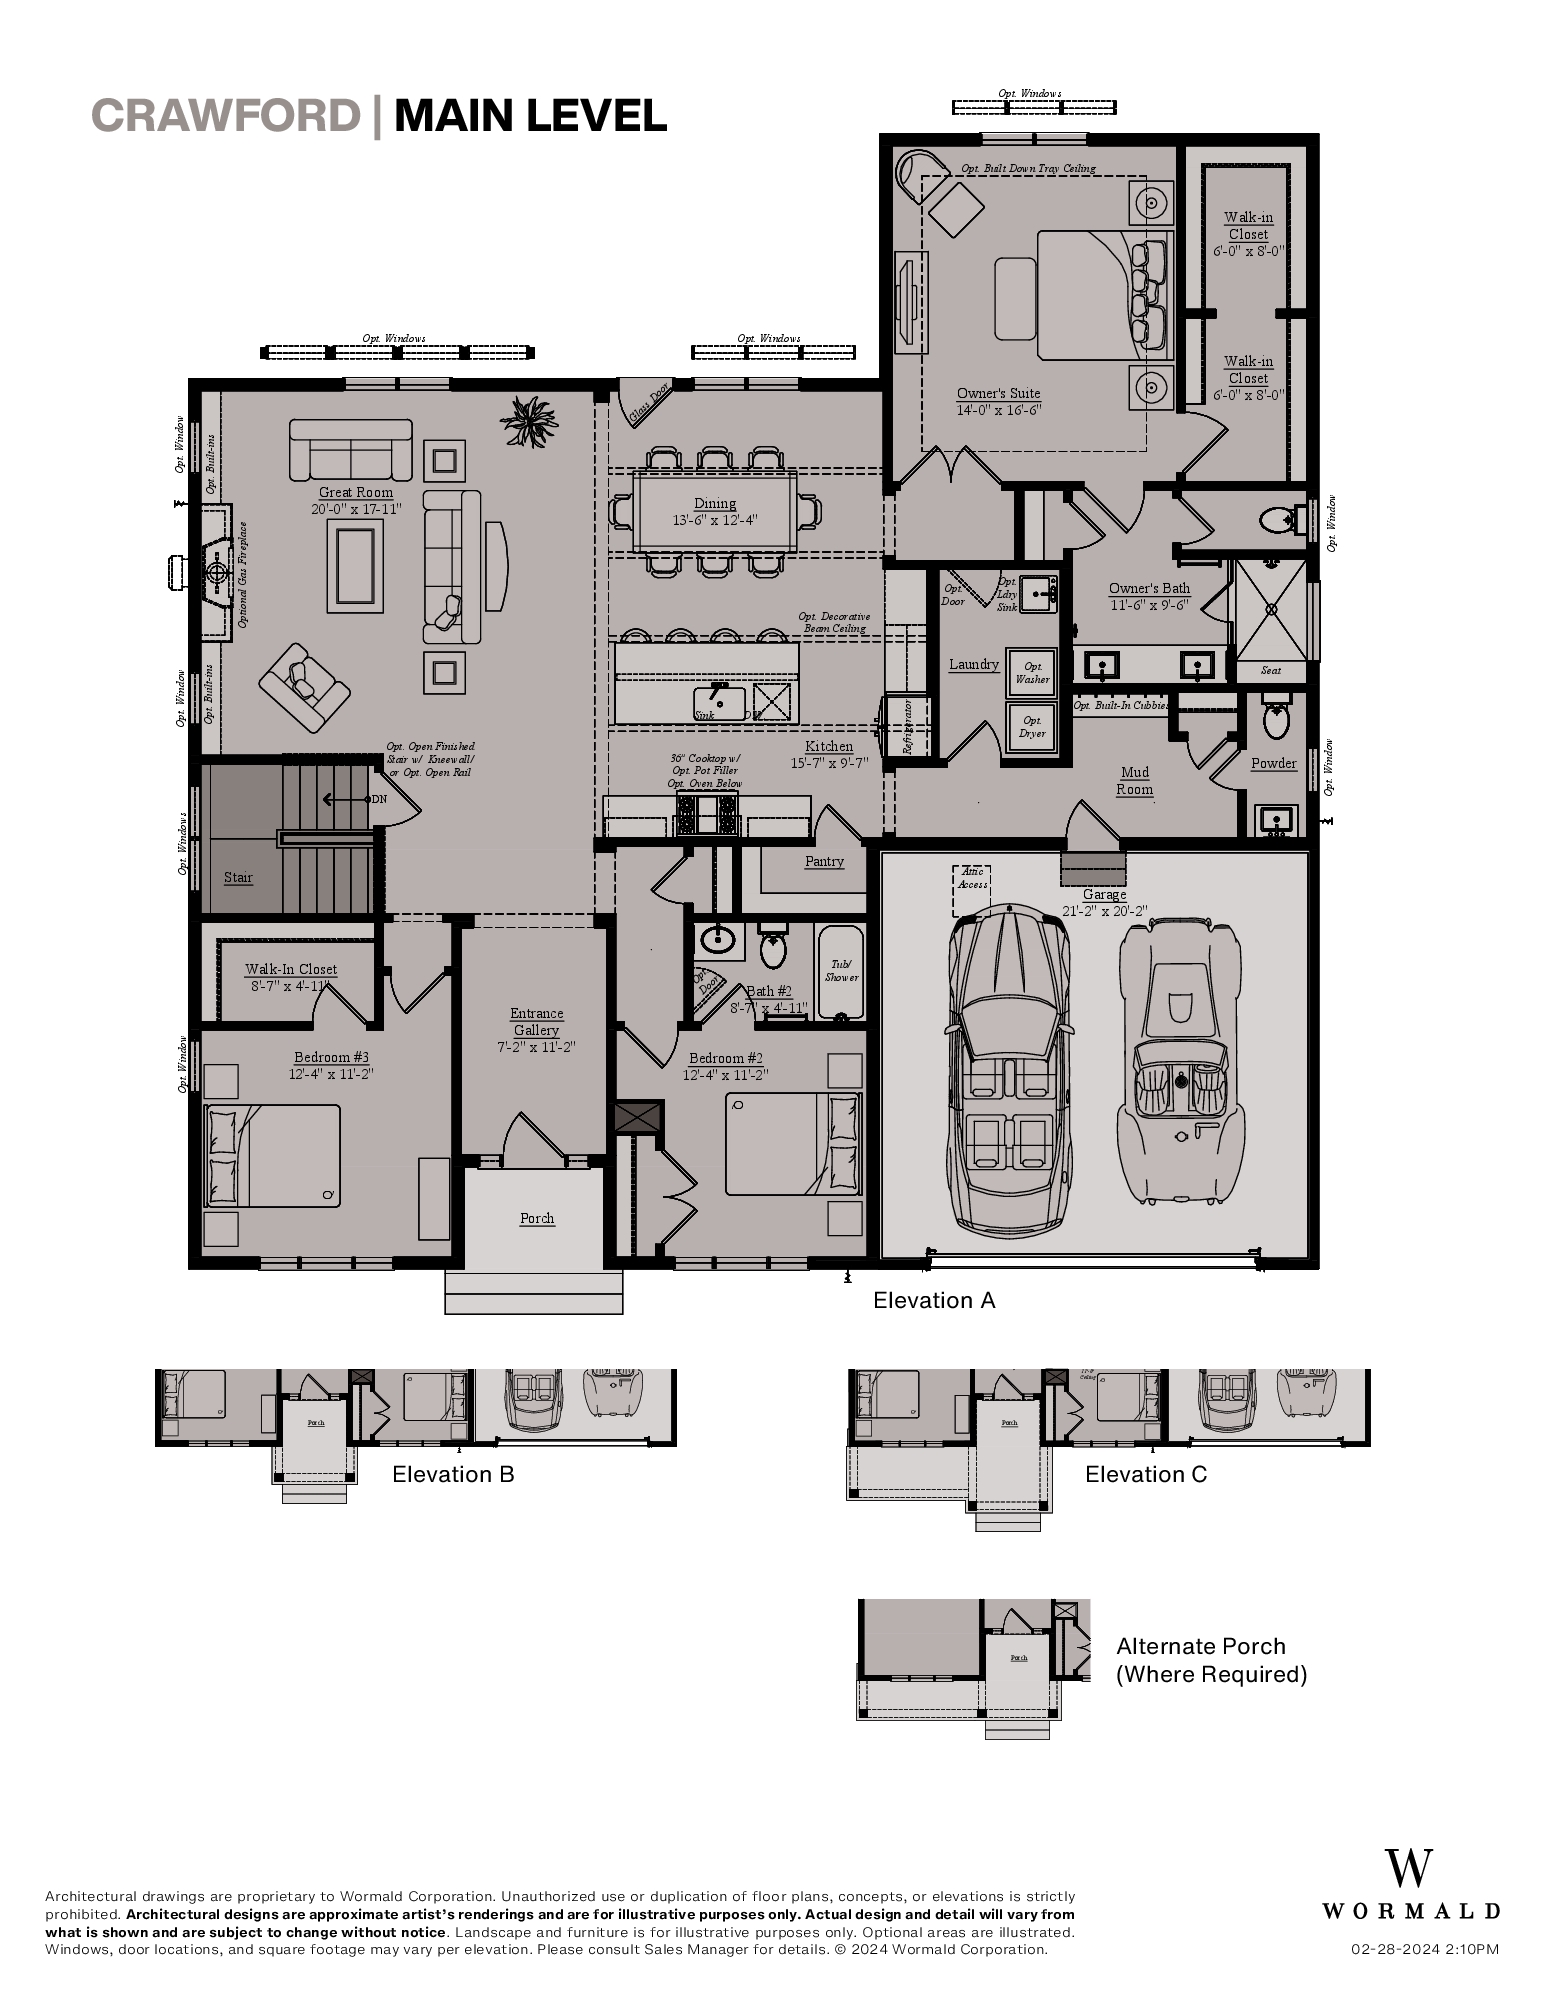 The Crawford floor plan 0